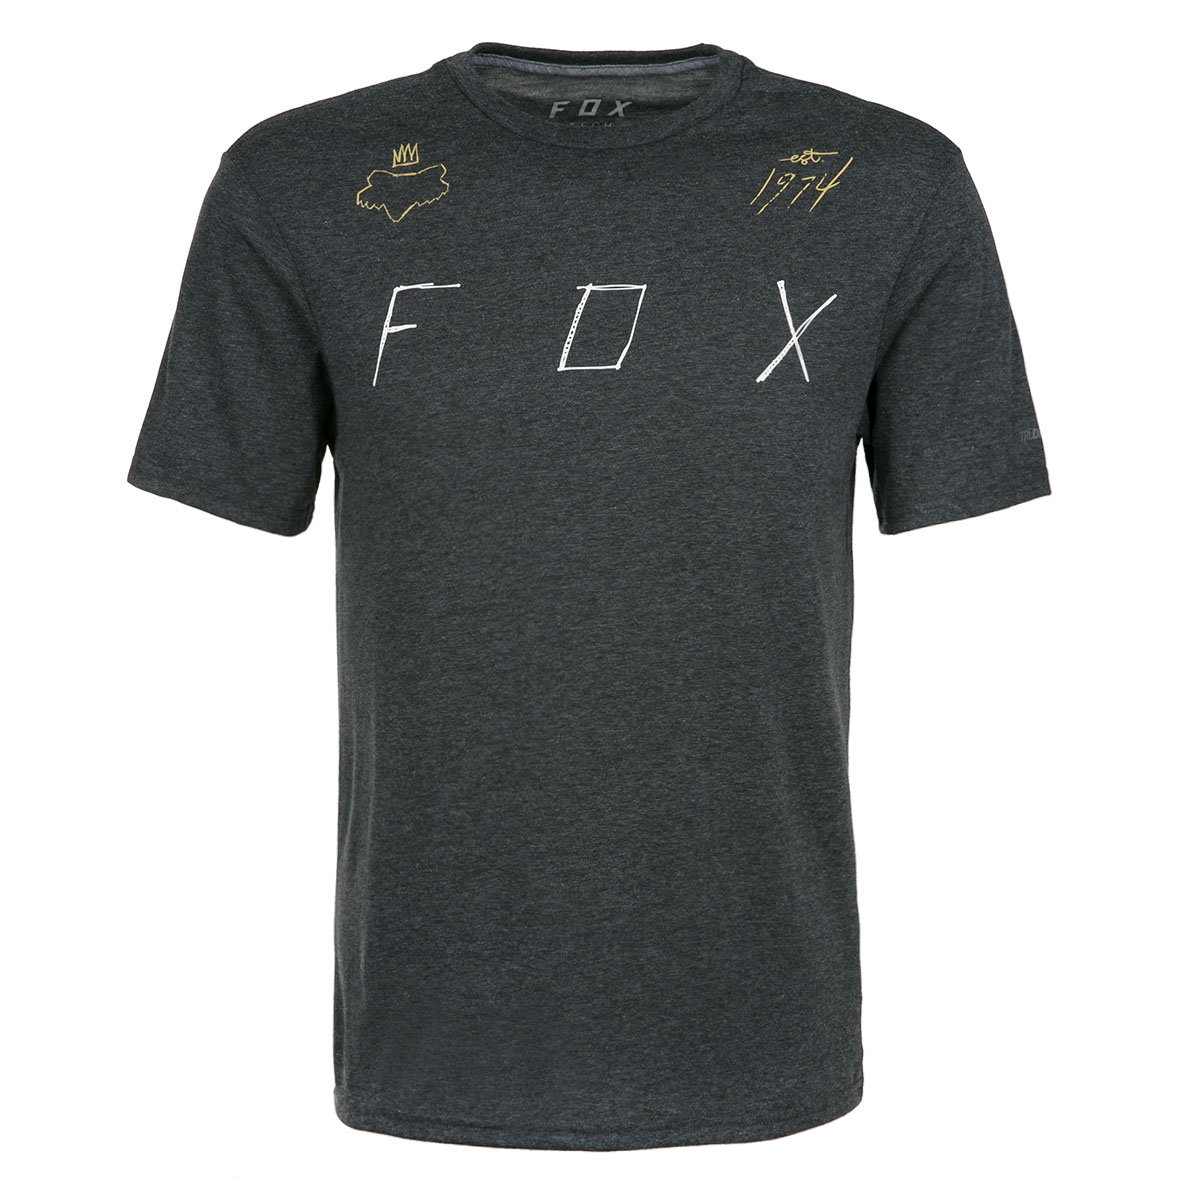 Fox T-Shirt Tech Melted Steal Heather Black